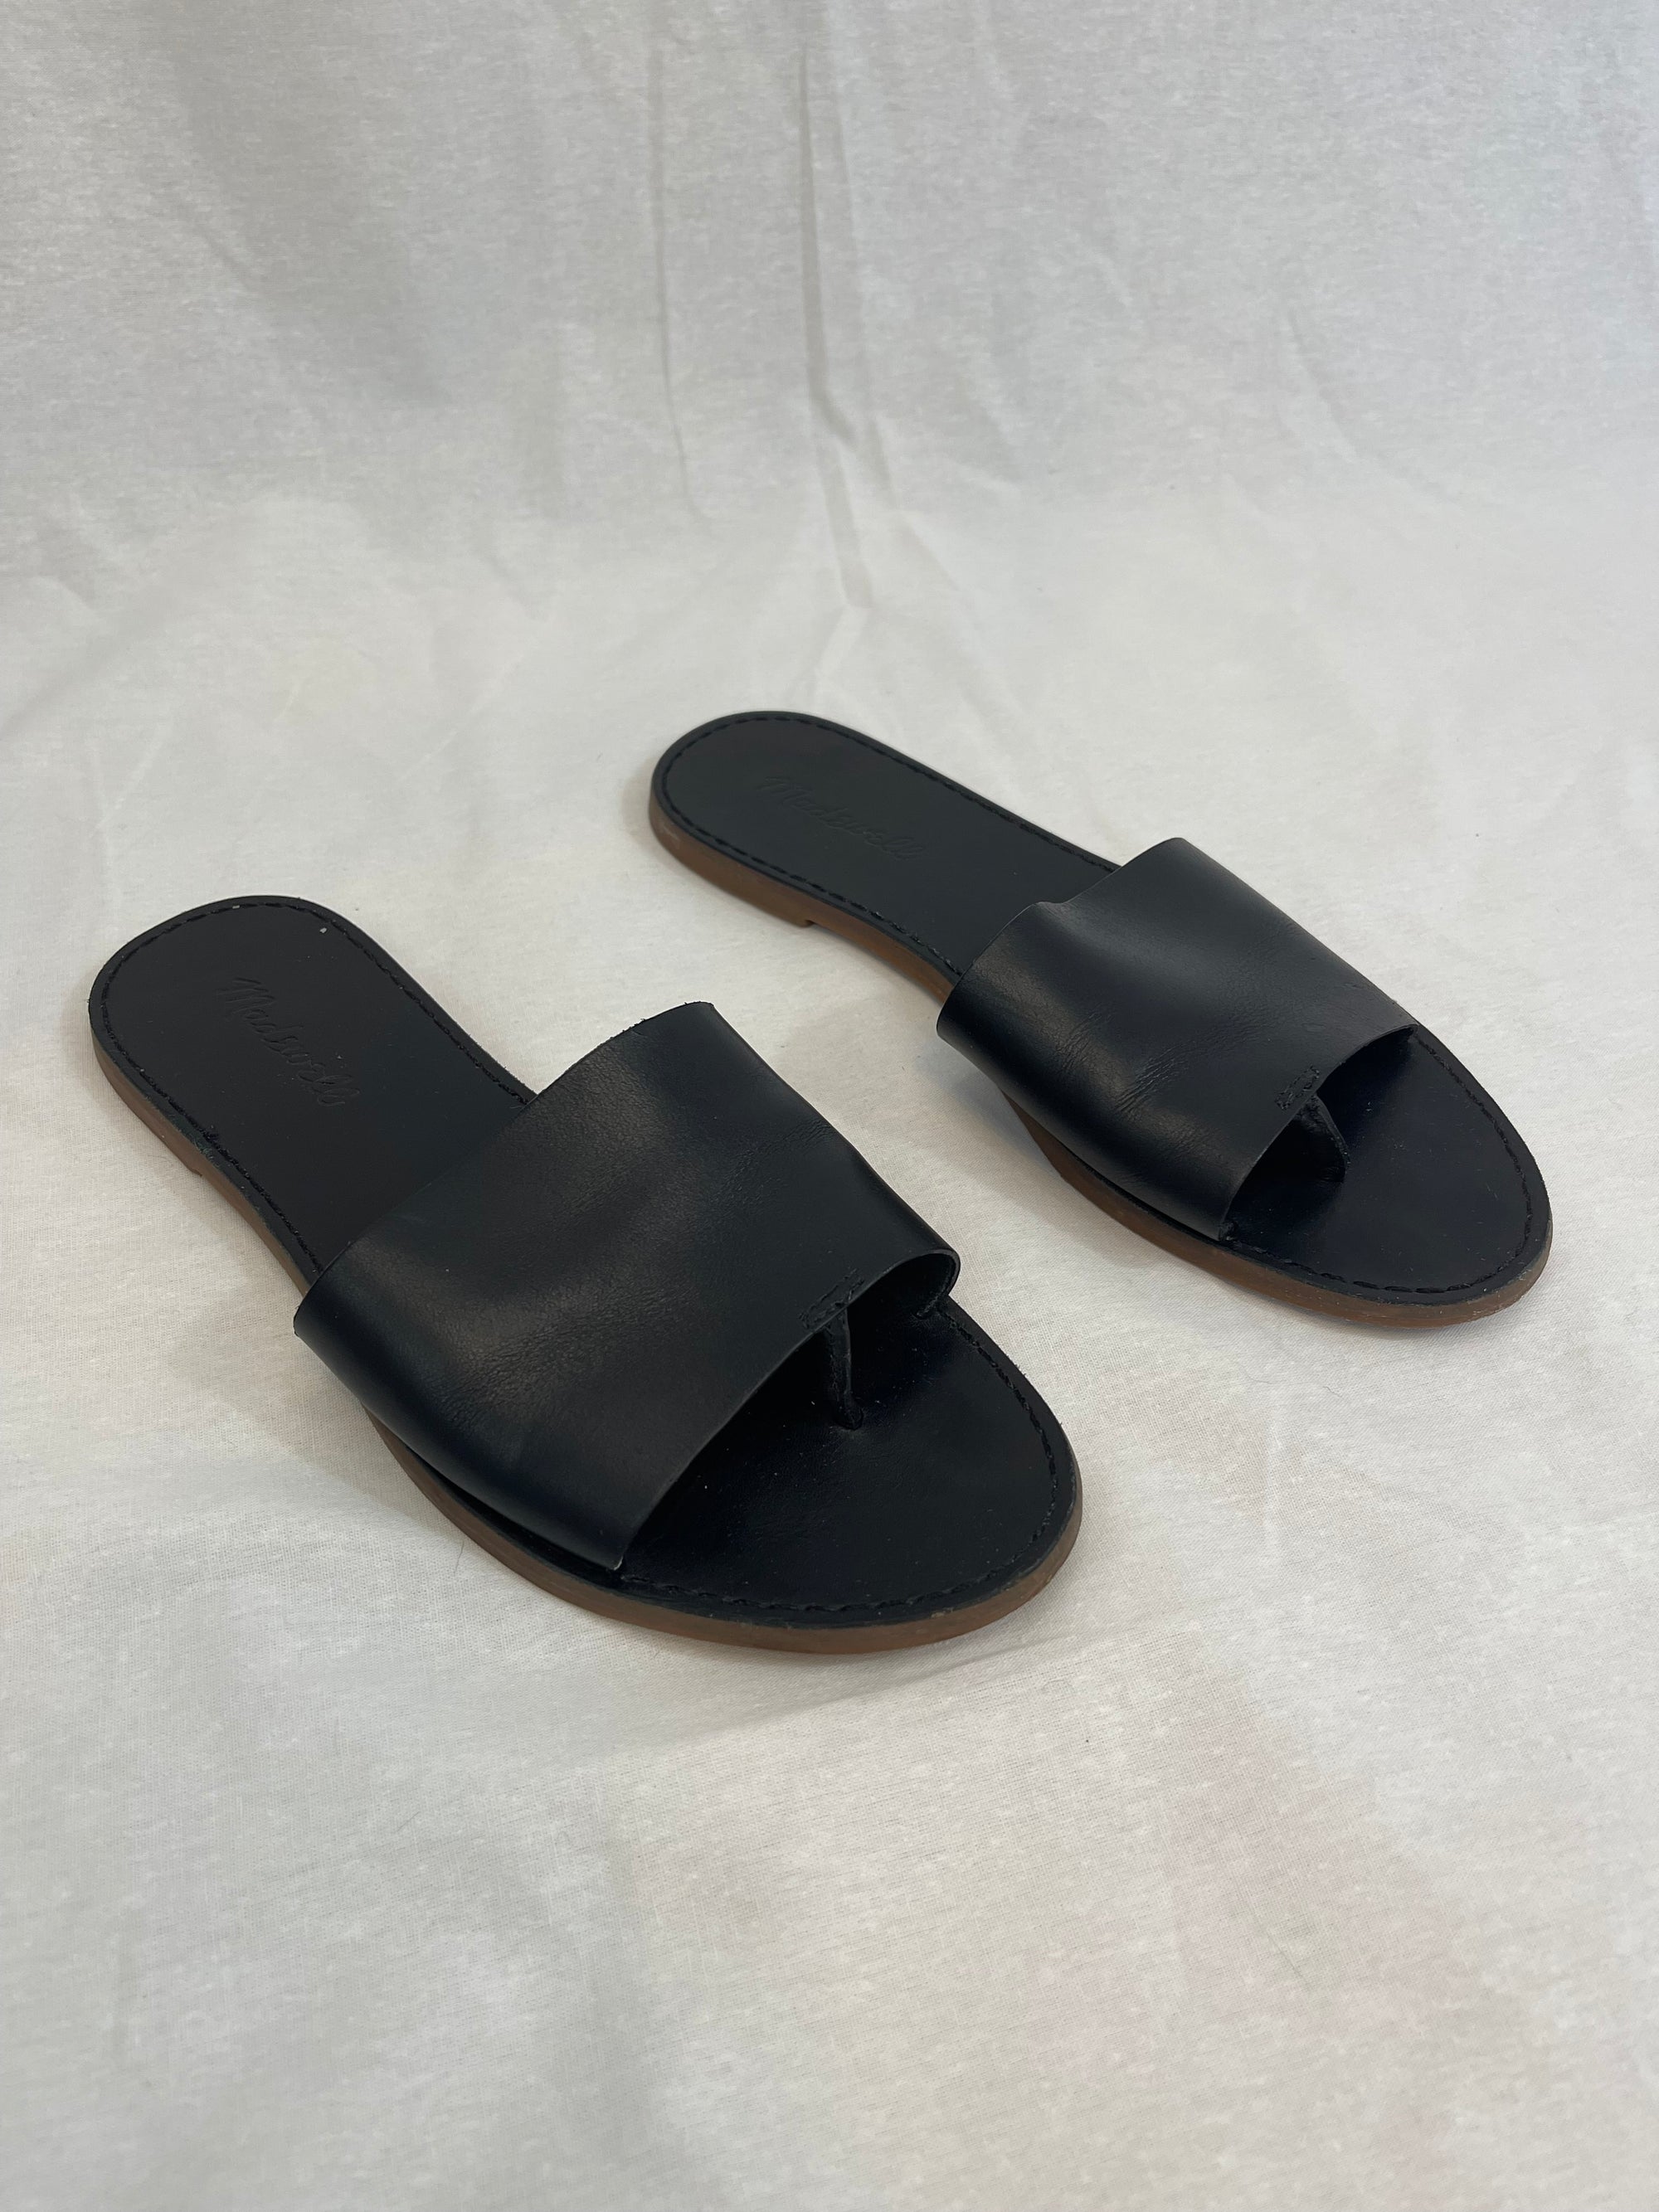 Madewell Black Leather Sandal size 8